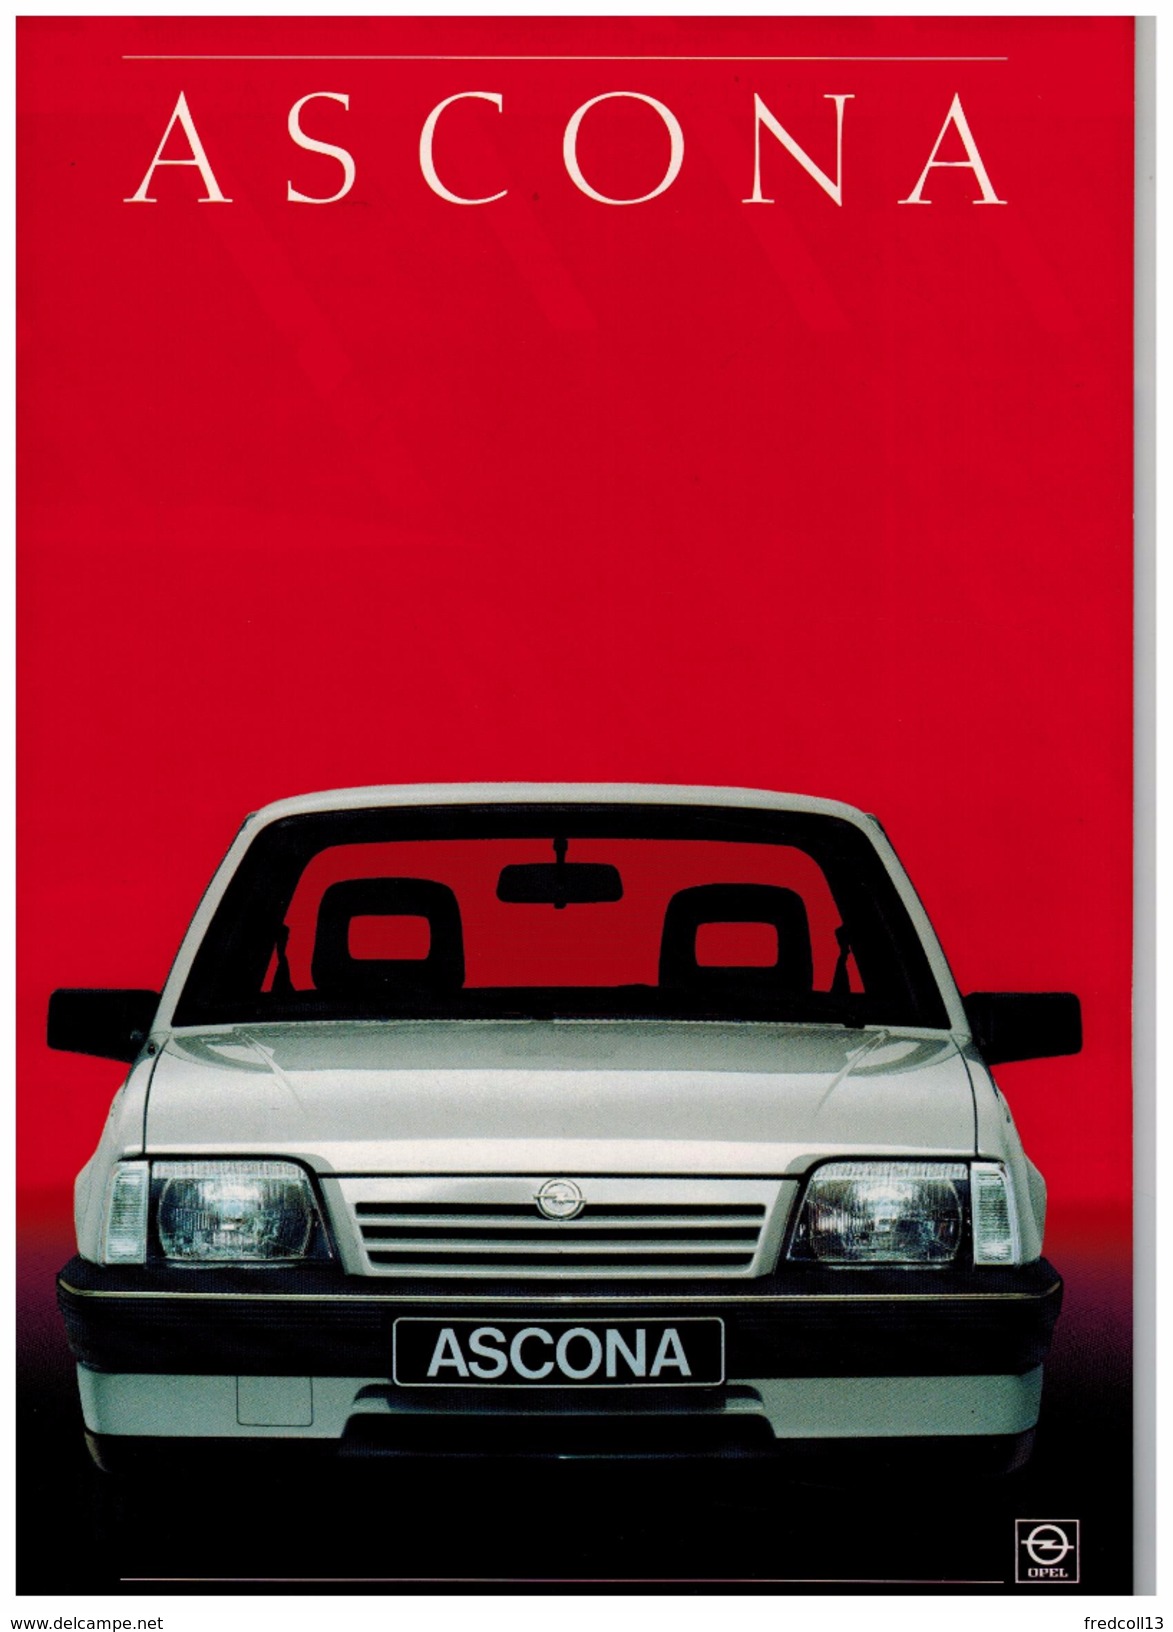 Opel Ascona: the bestseller car from Ascona